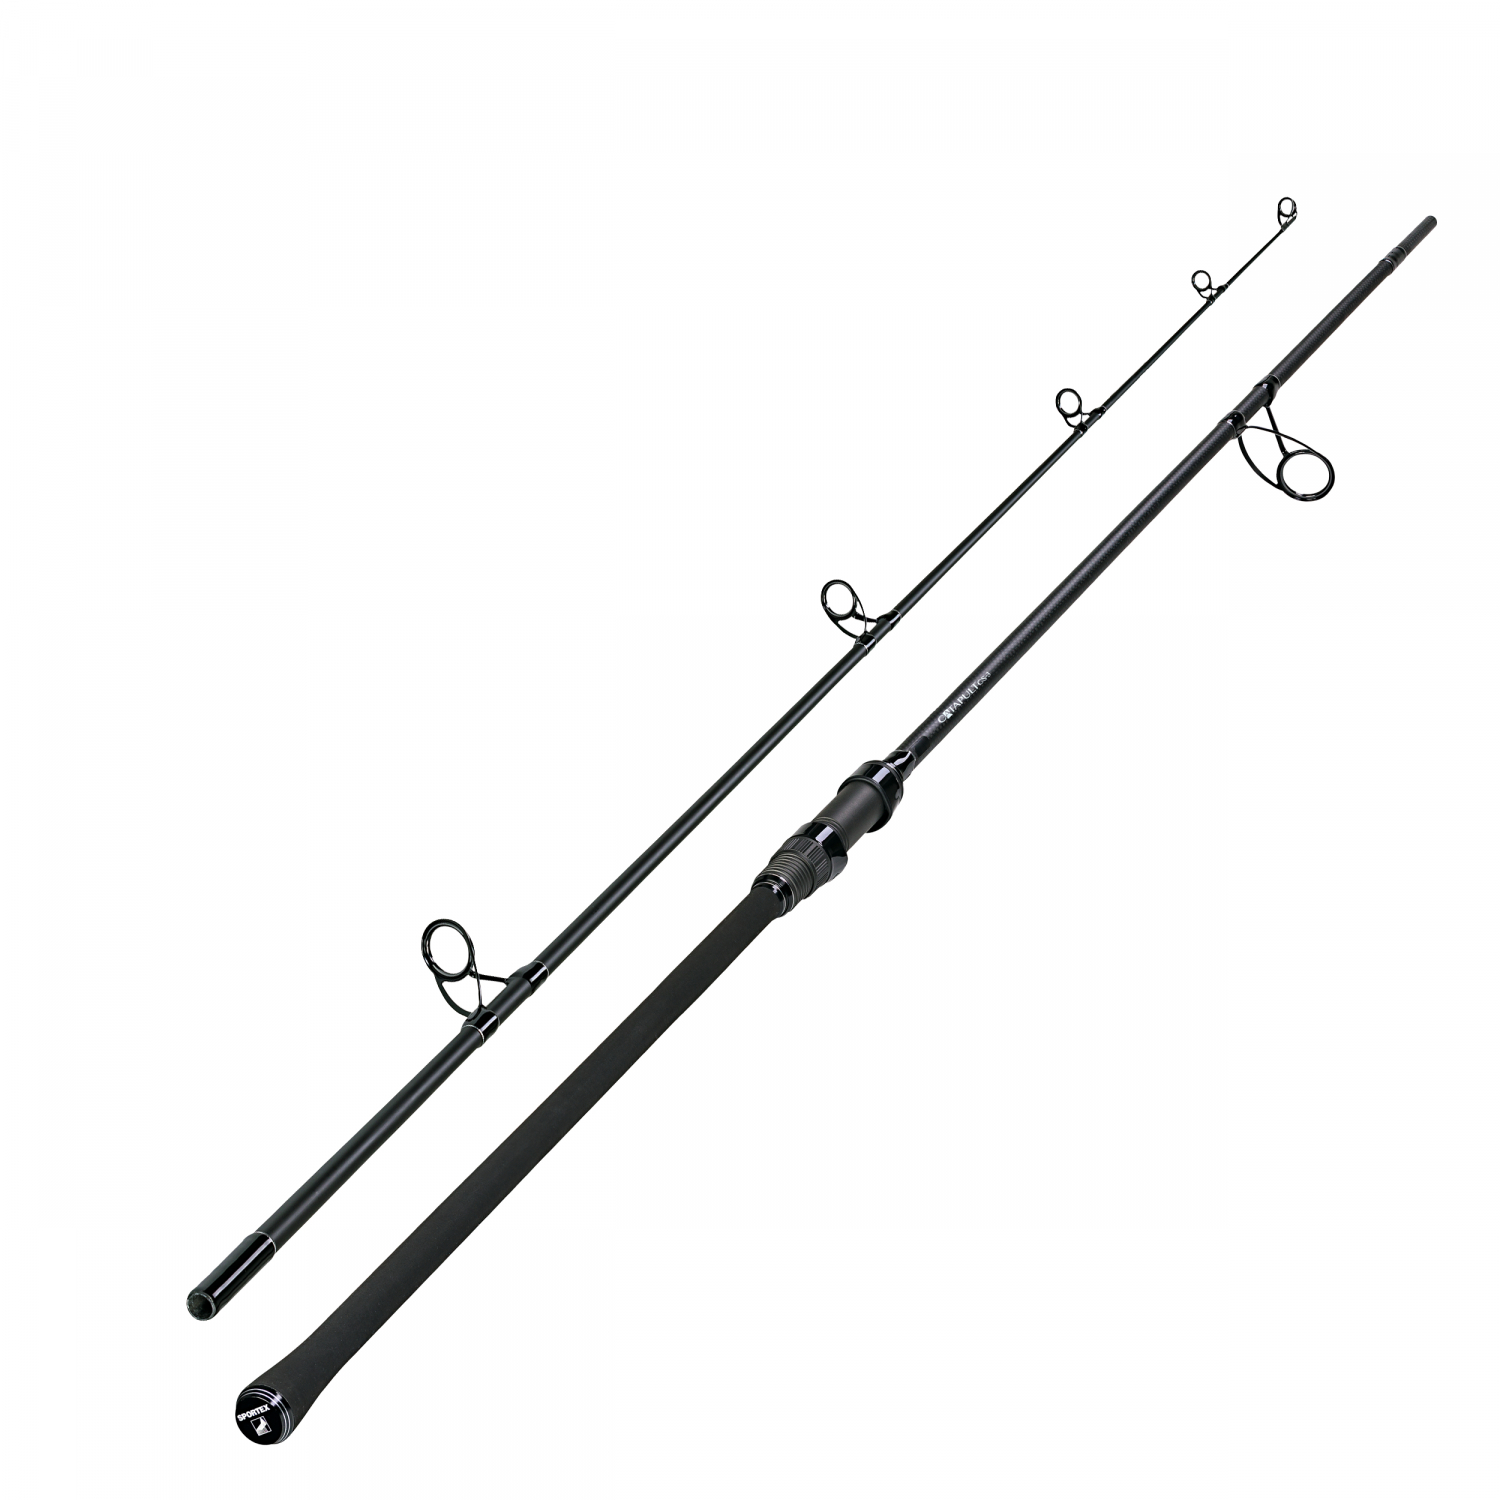 https://images.askari-sport.com/en/product/1/large/sportex-carp-fishing-rod-catapult-cs3-1621548032-1.jpg